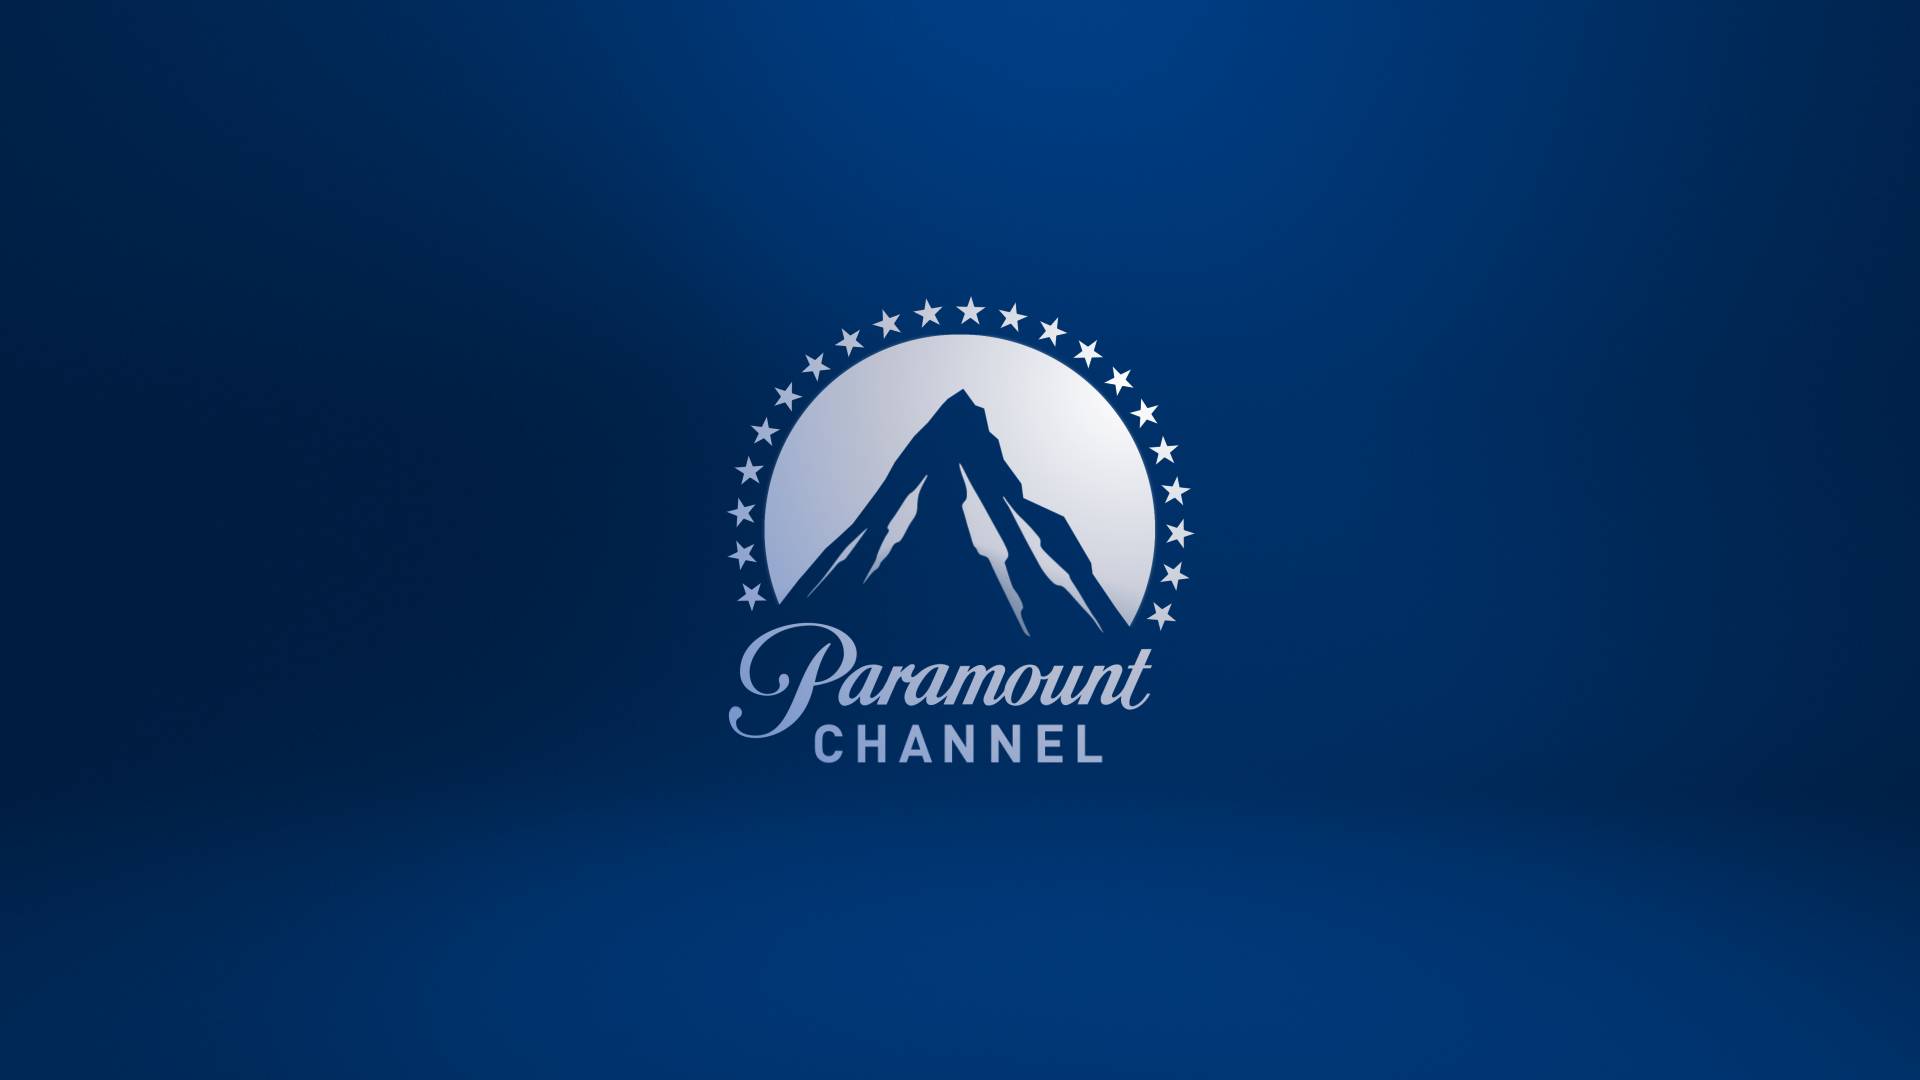 Paramount Channel Branding 2012